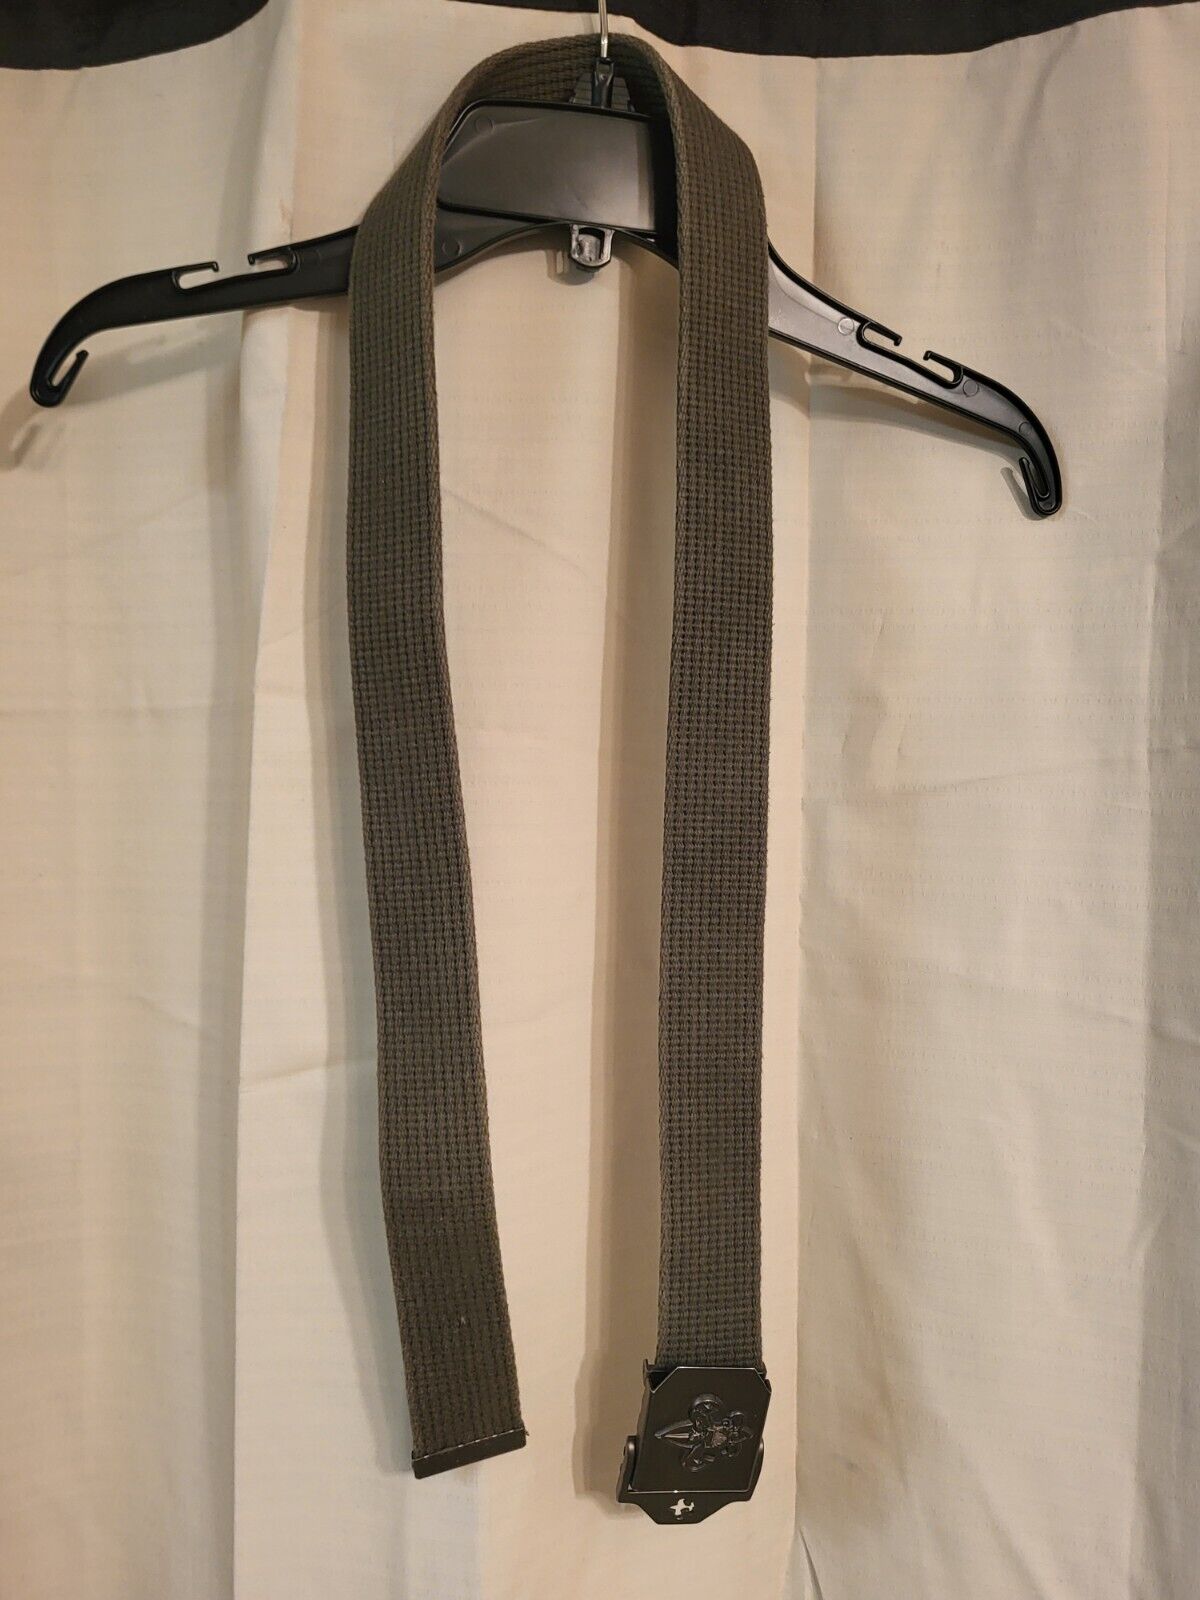 Boy Scout Boys Green Nylon Adjustable Buckle Uniform Belt 40 Inches Long (A12)